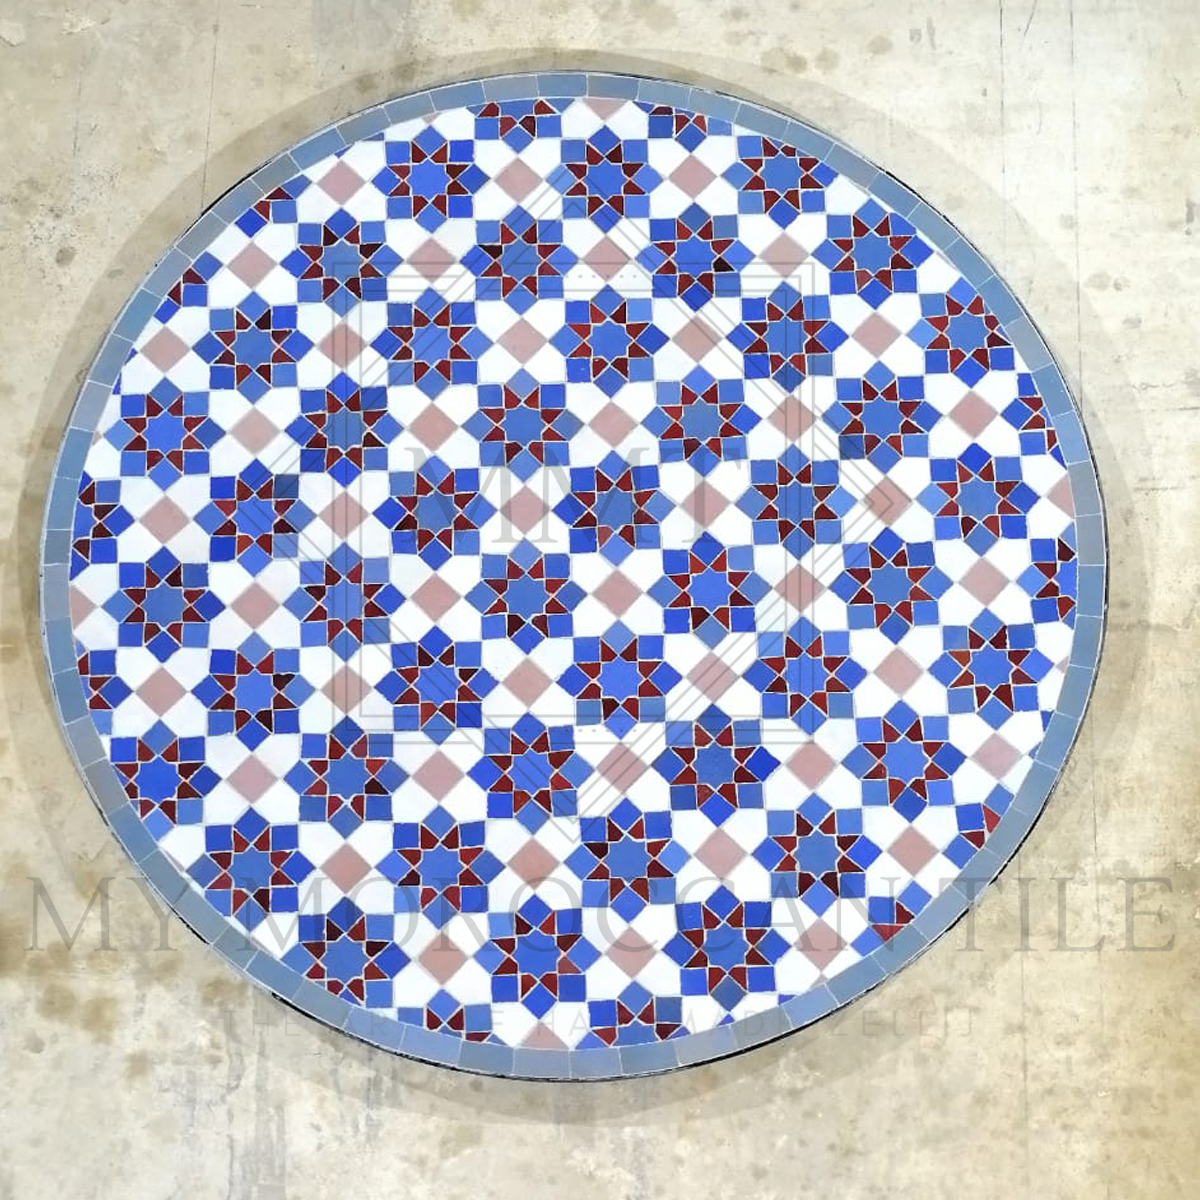 Handmade Moroccan Mosaic Table 2108-03